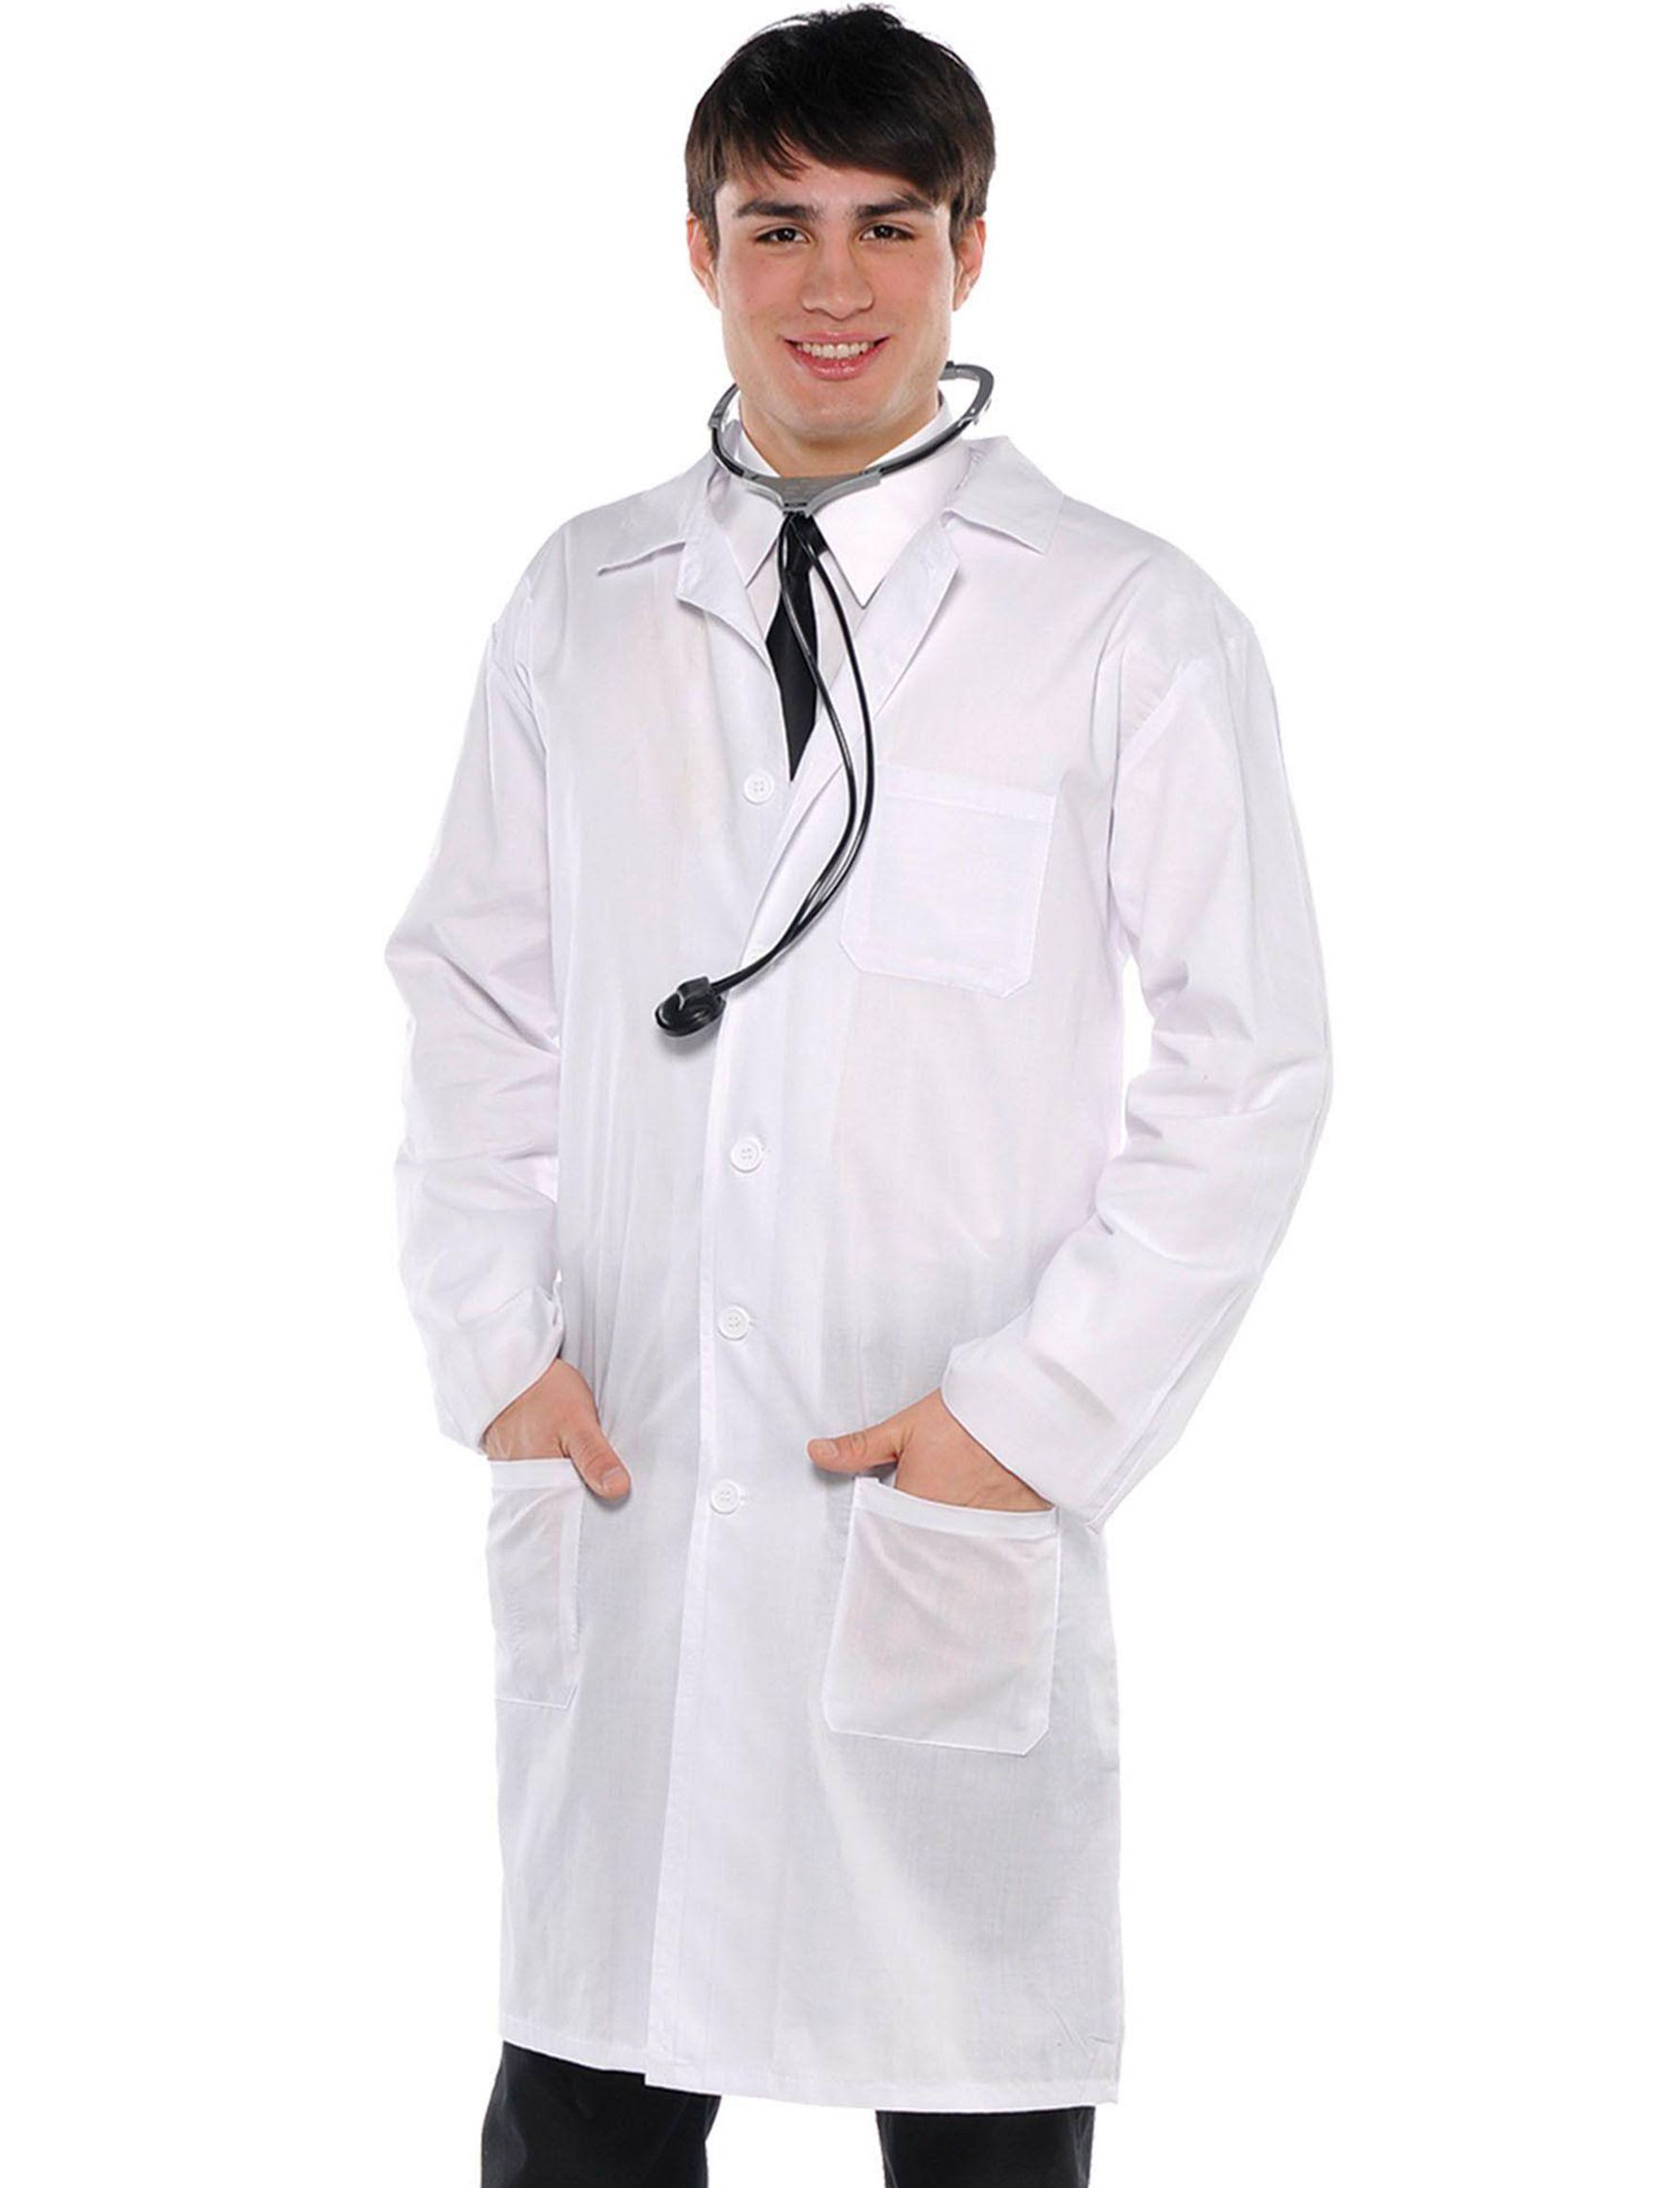 Doctor Lab Coat, Adult